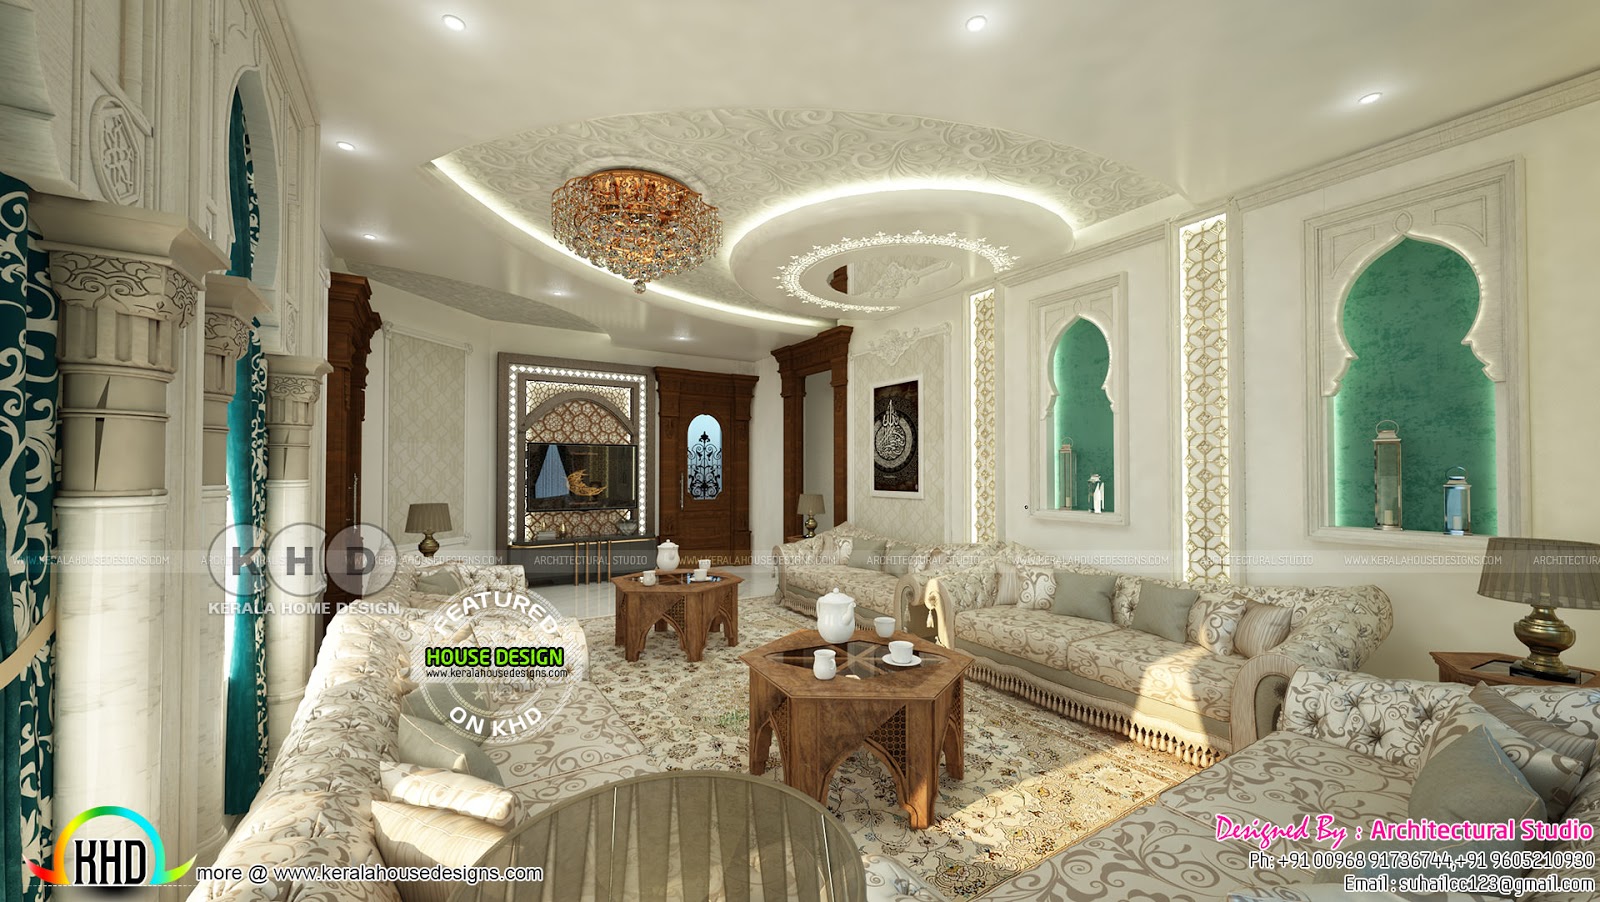 4306 Sq Ft Arabian Model House With Interiors Kerala Home